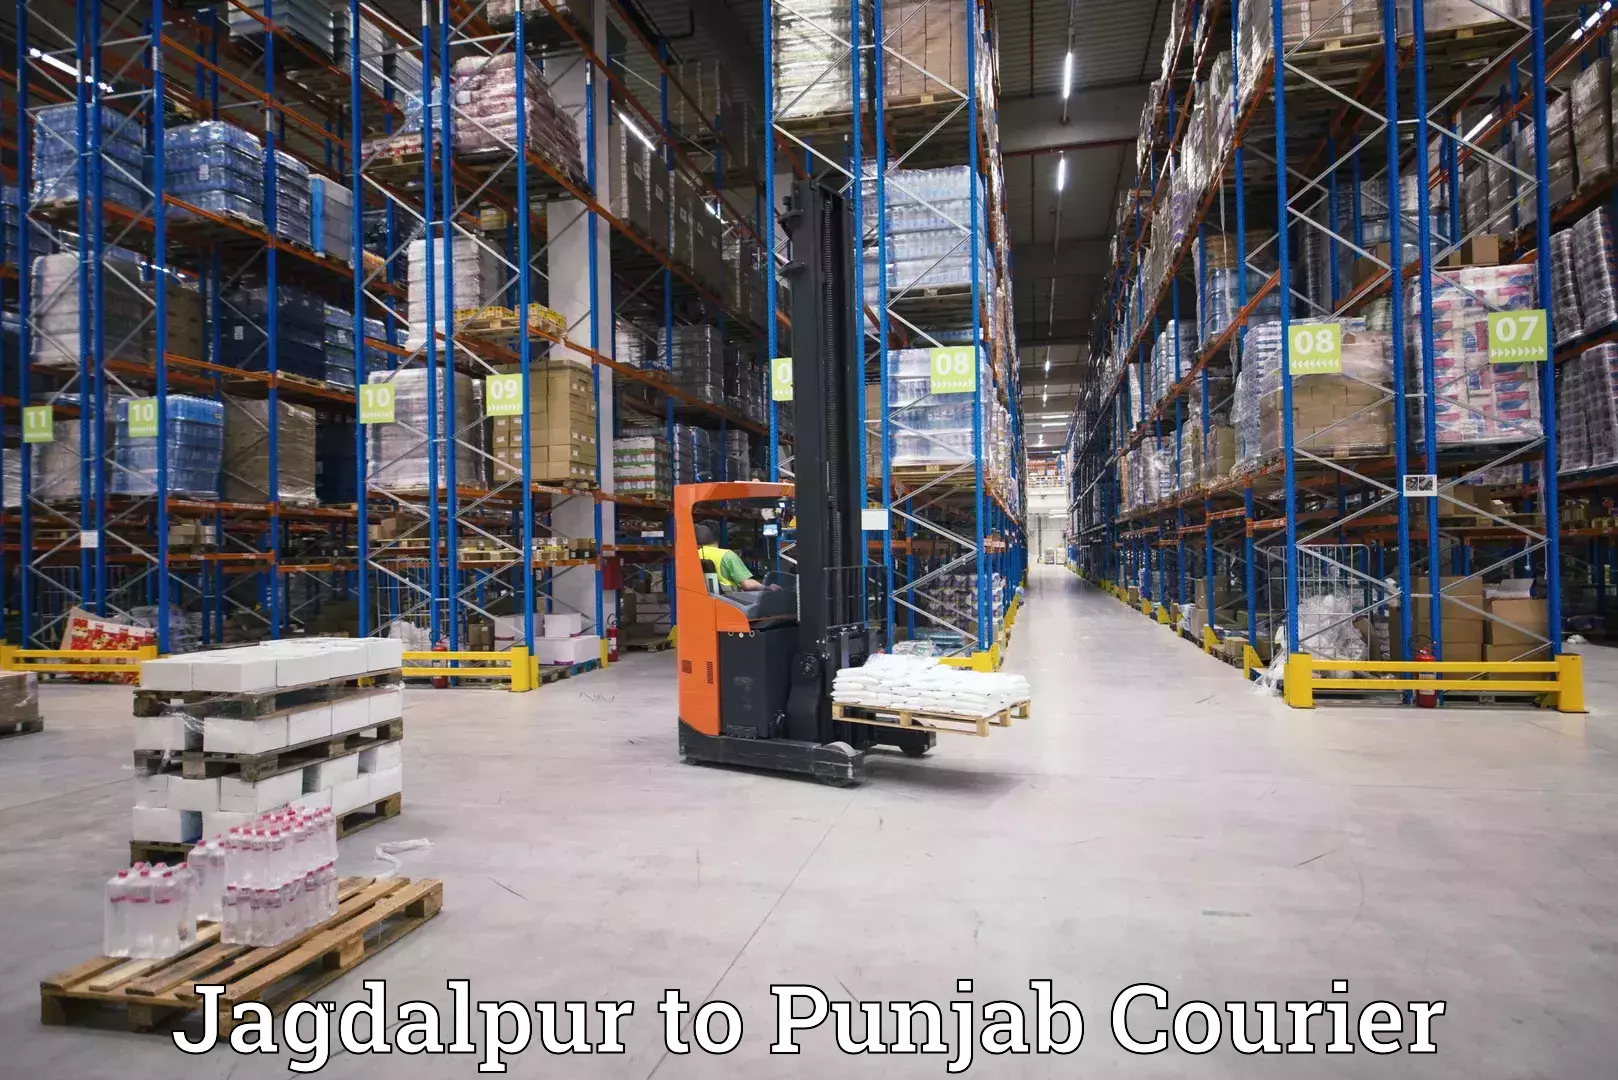 Express logistics providers Jagdalpur to Amritsar